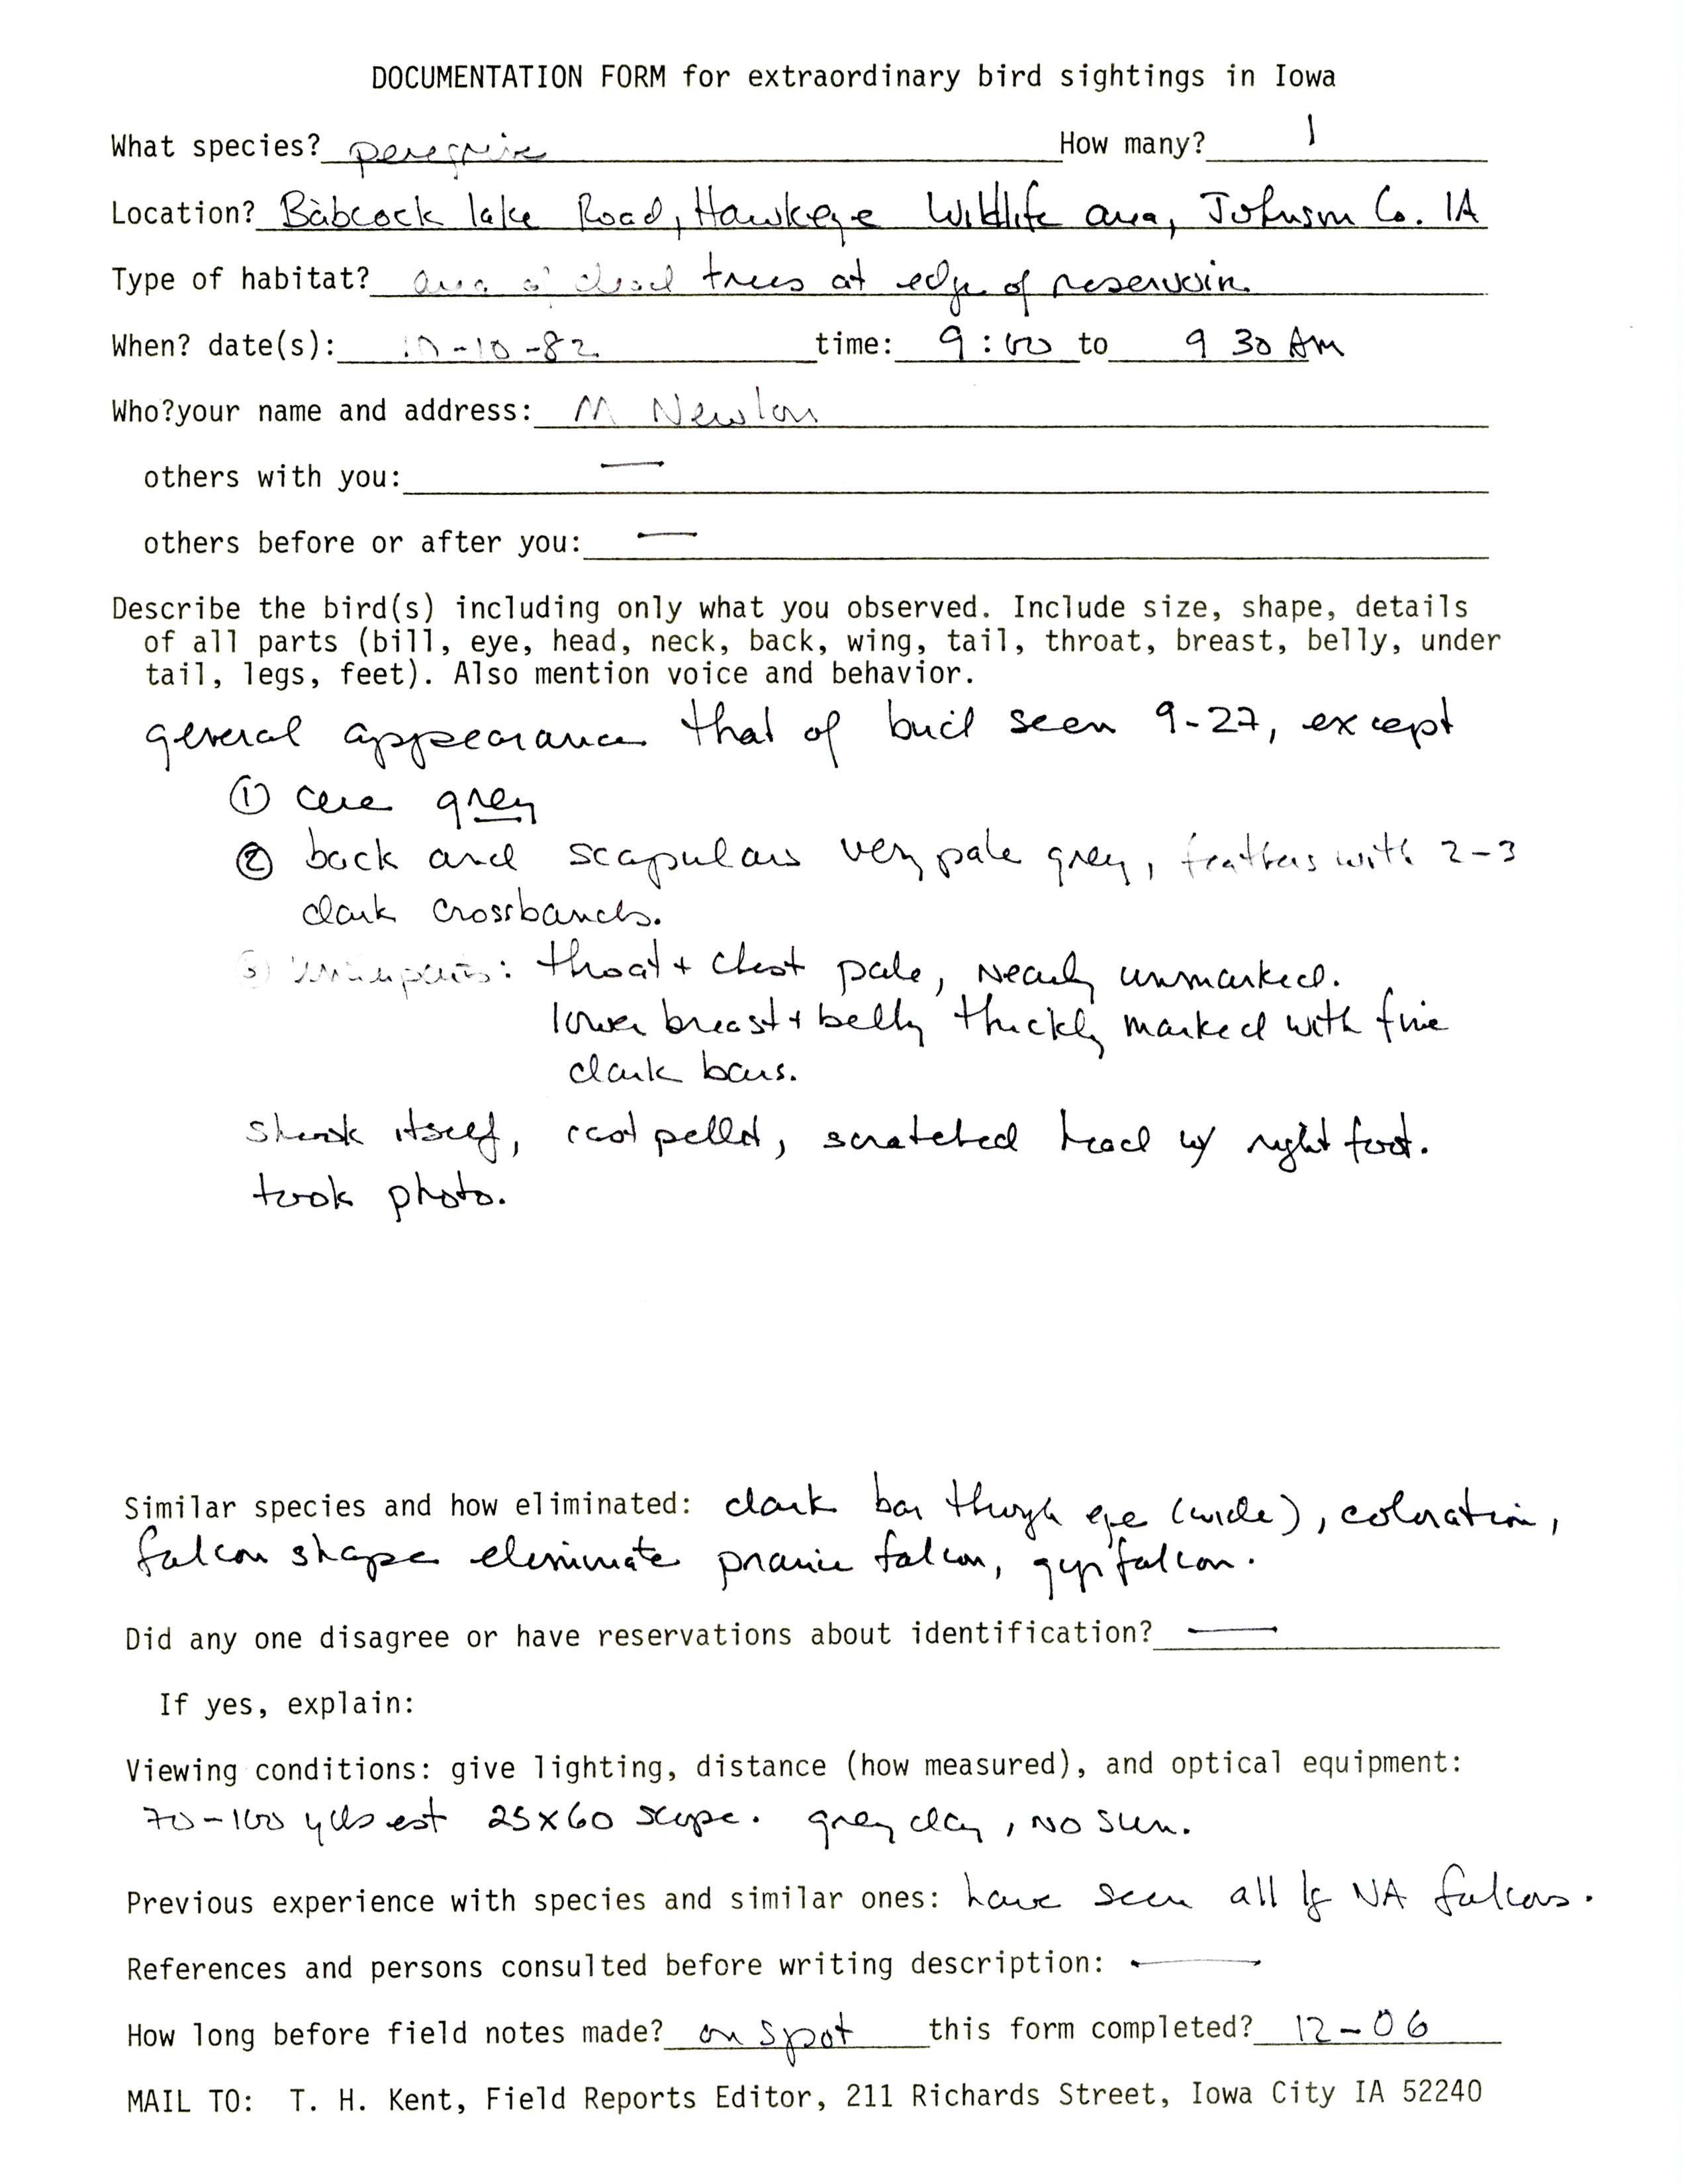 Rare bird documentation form for Peregrine Falcon at Babcock Access, 1982